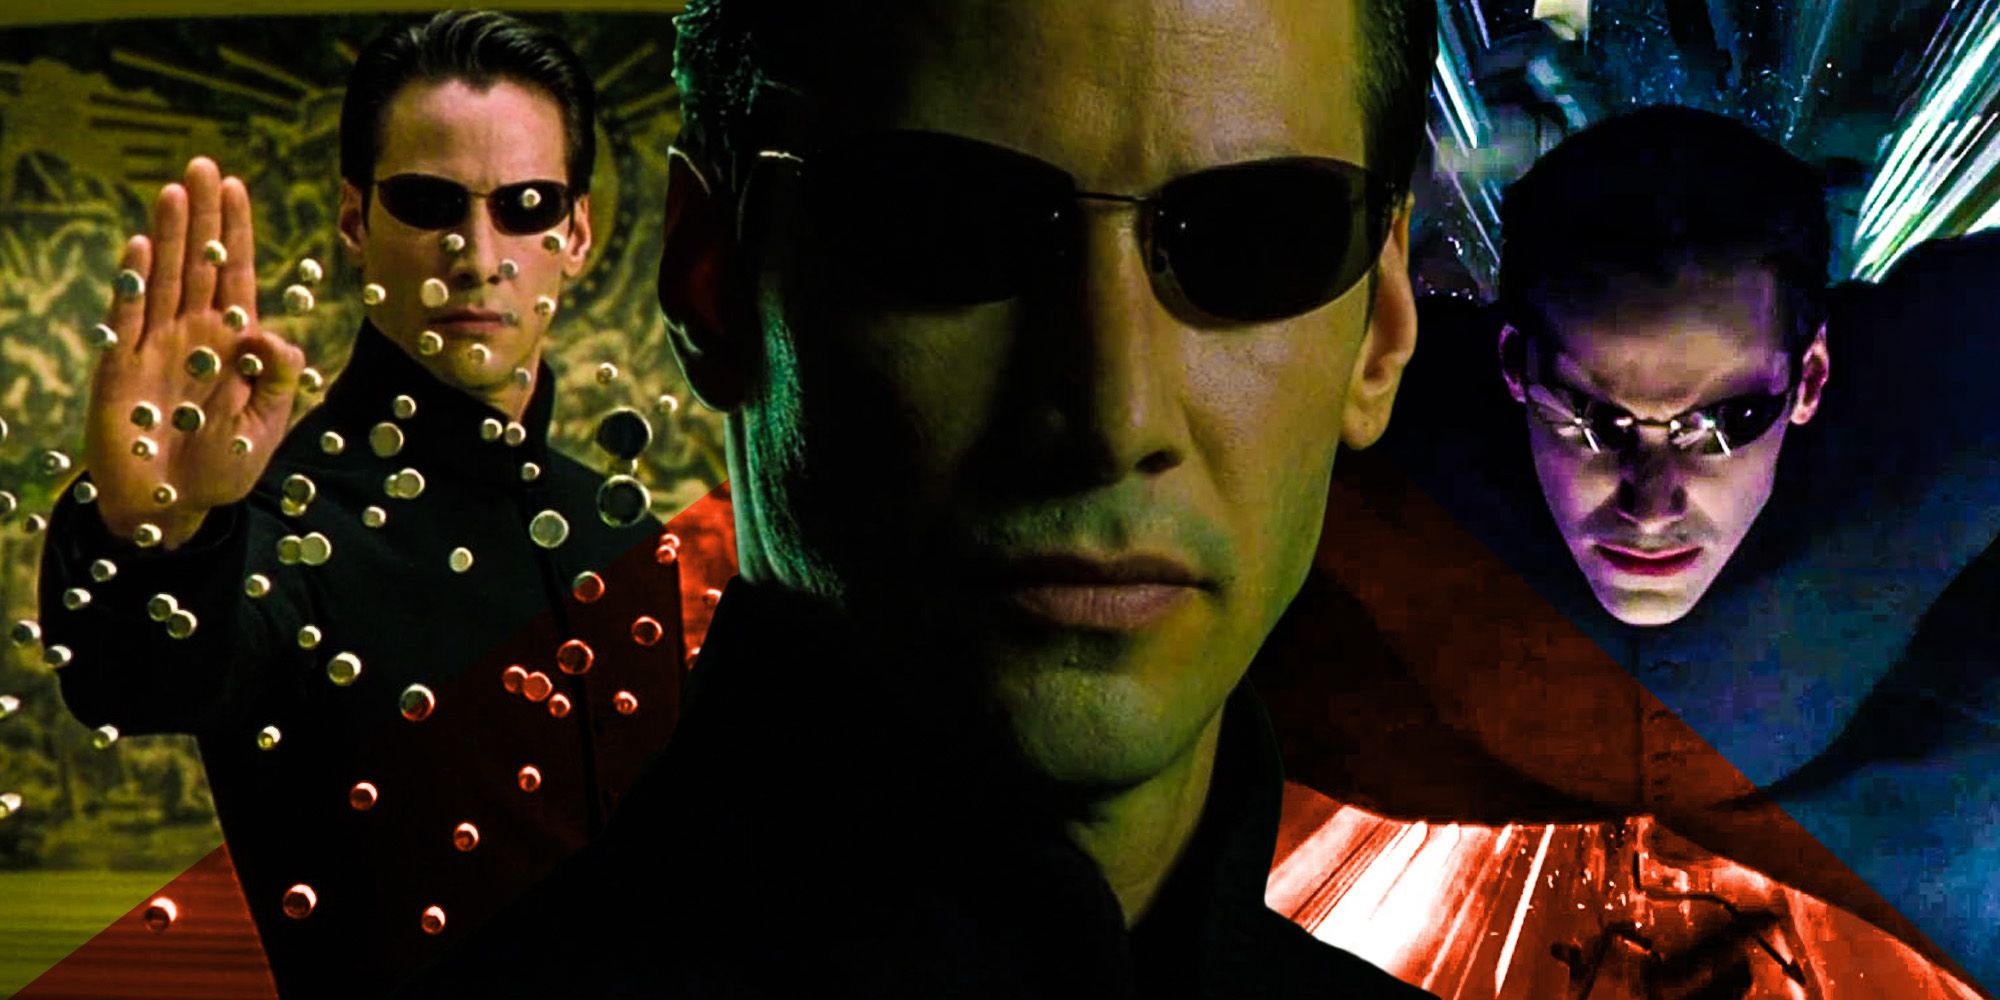 The matrix